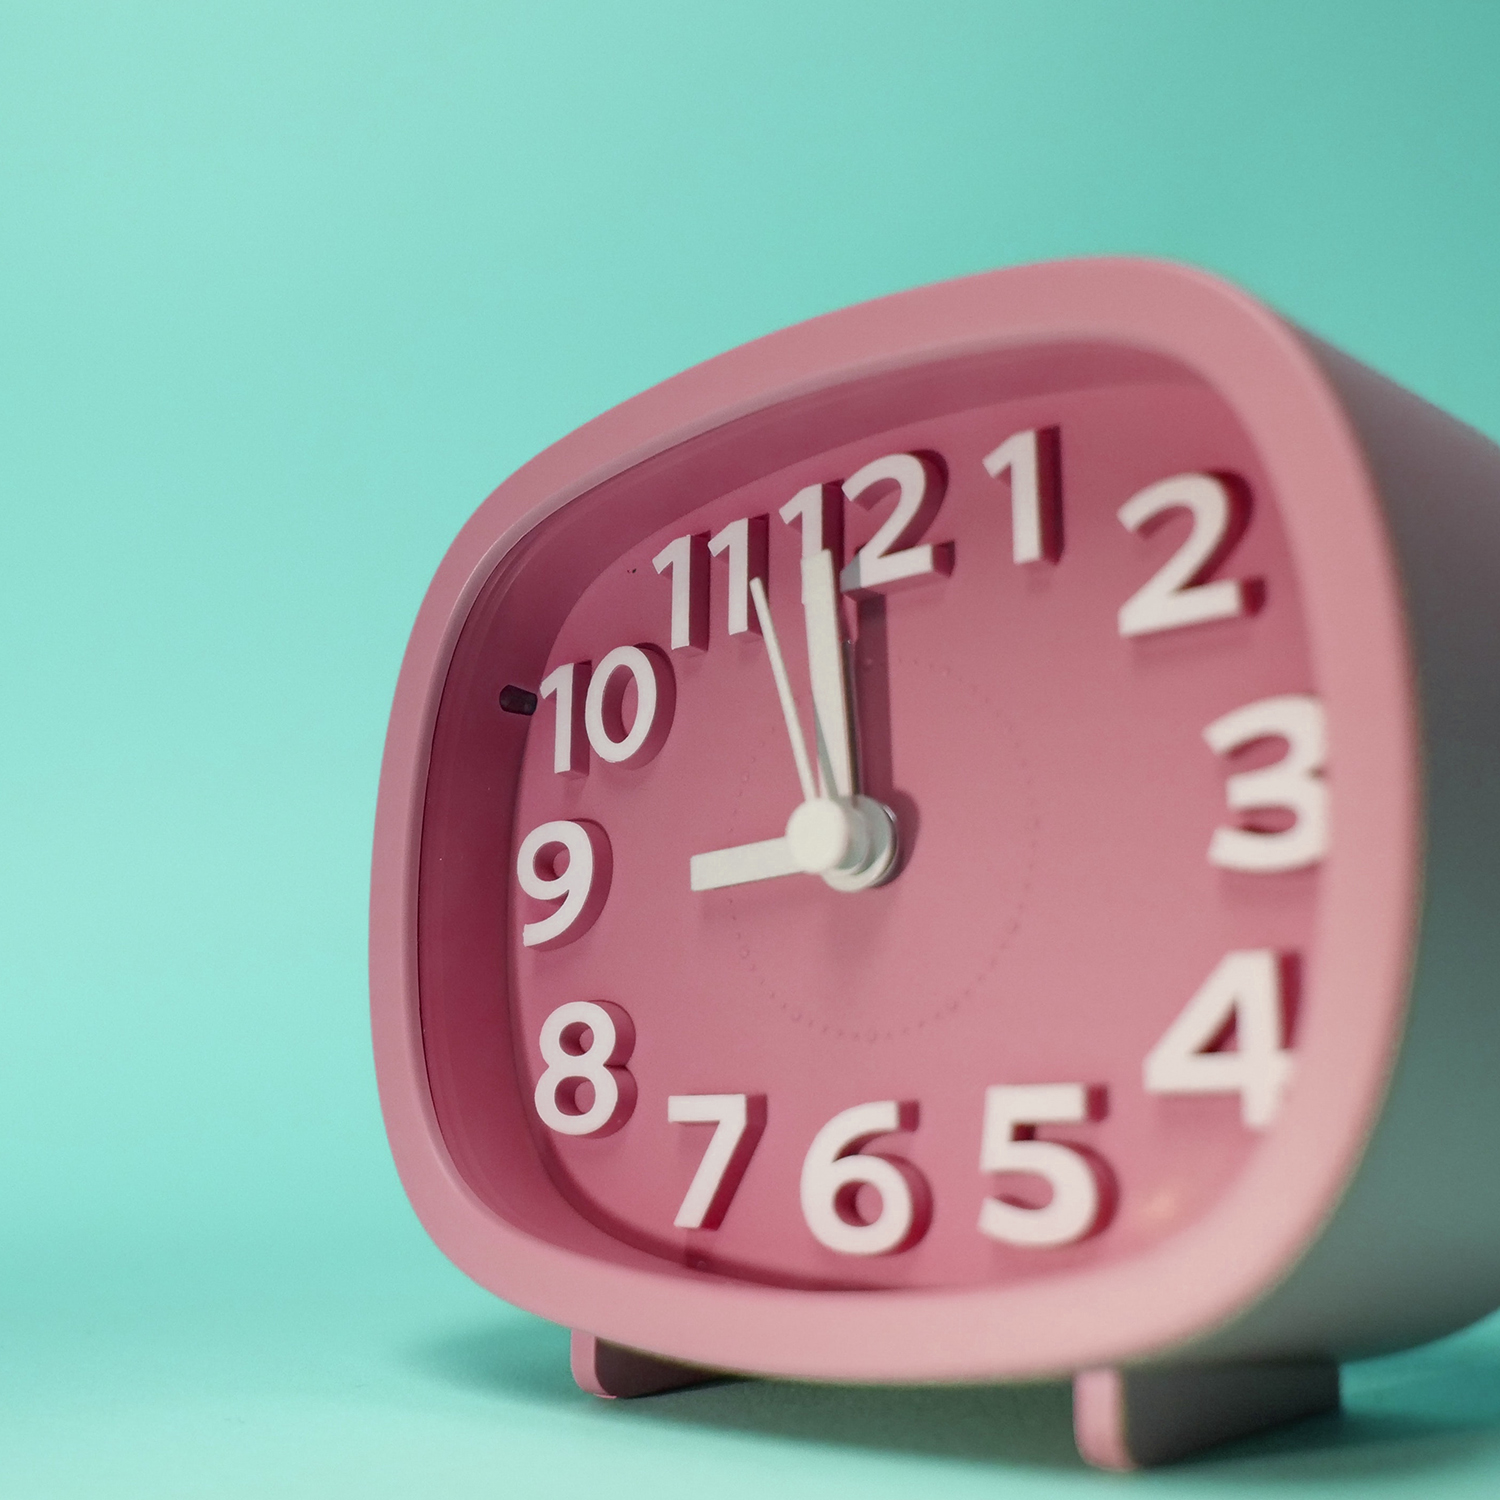 Alarm clock by Kindel Media via Pexels